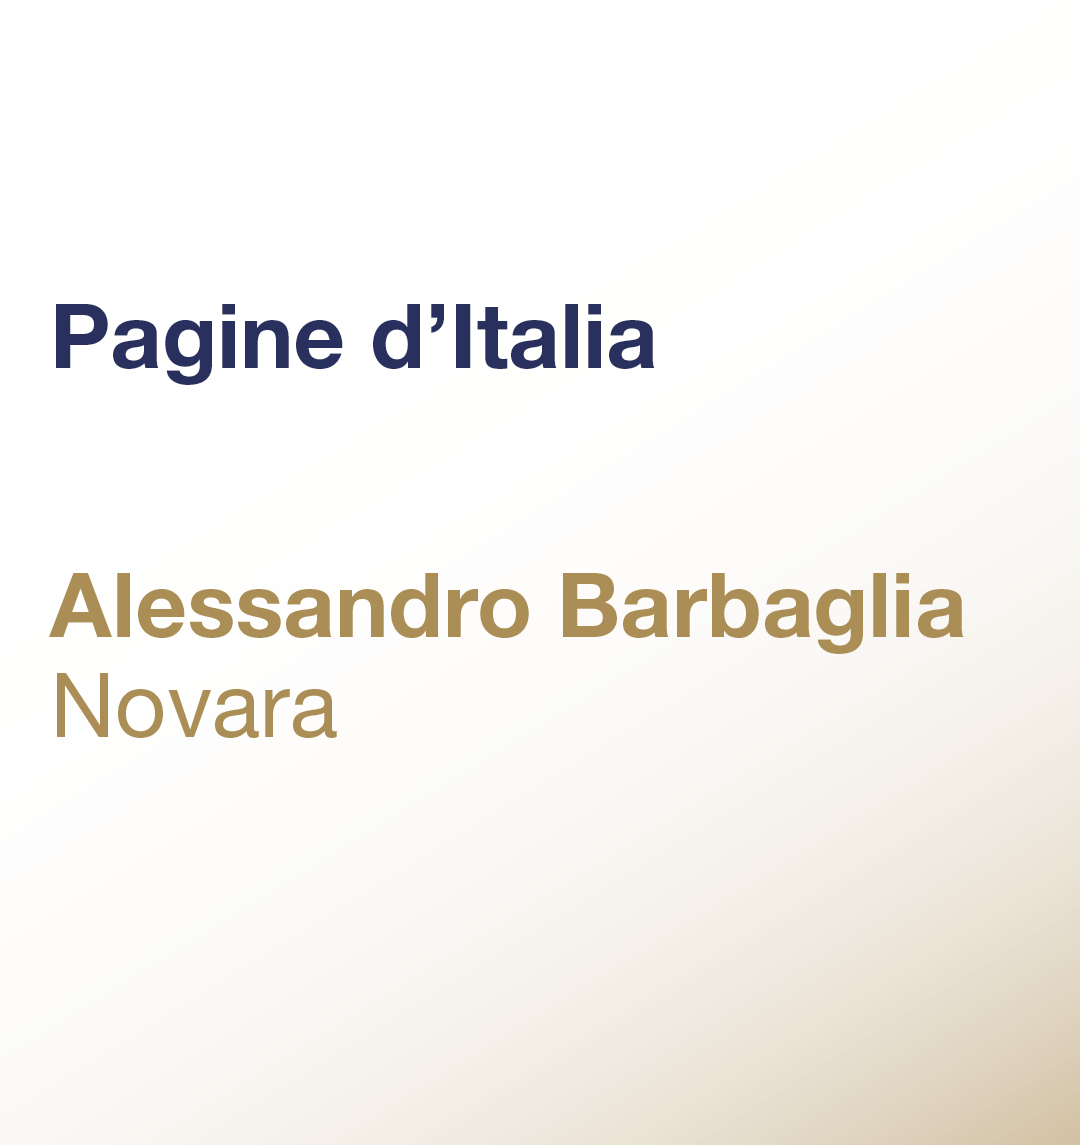 Pagine d’Italia – Alessandro Barbaglia – Novara